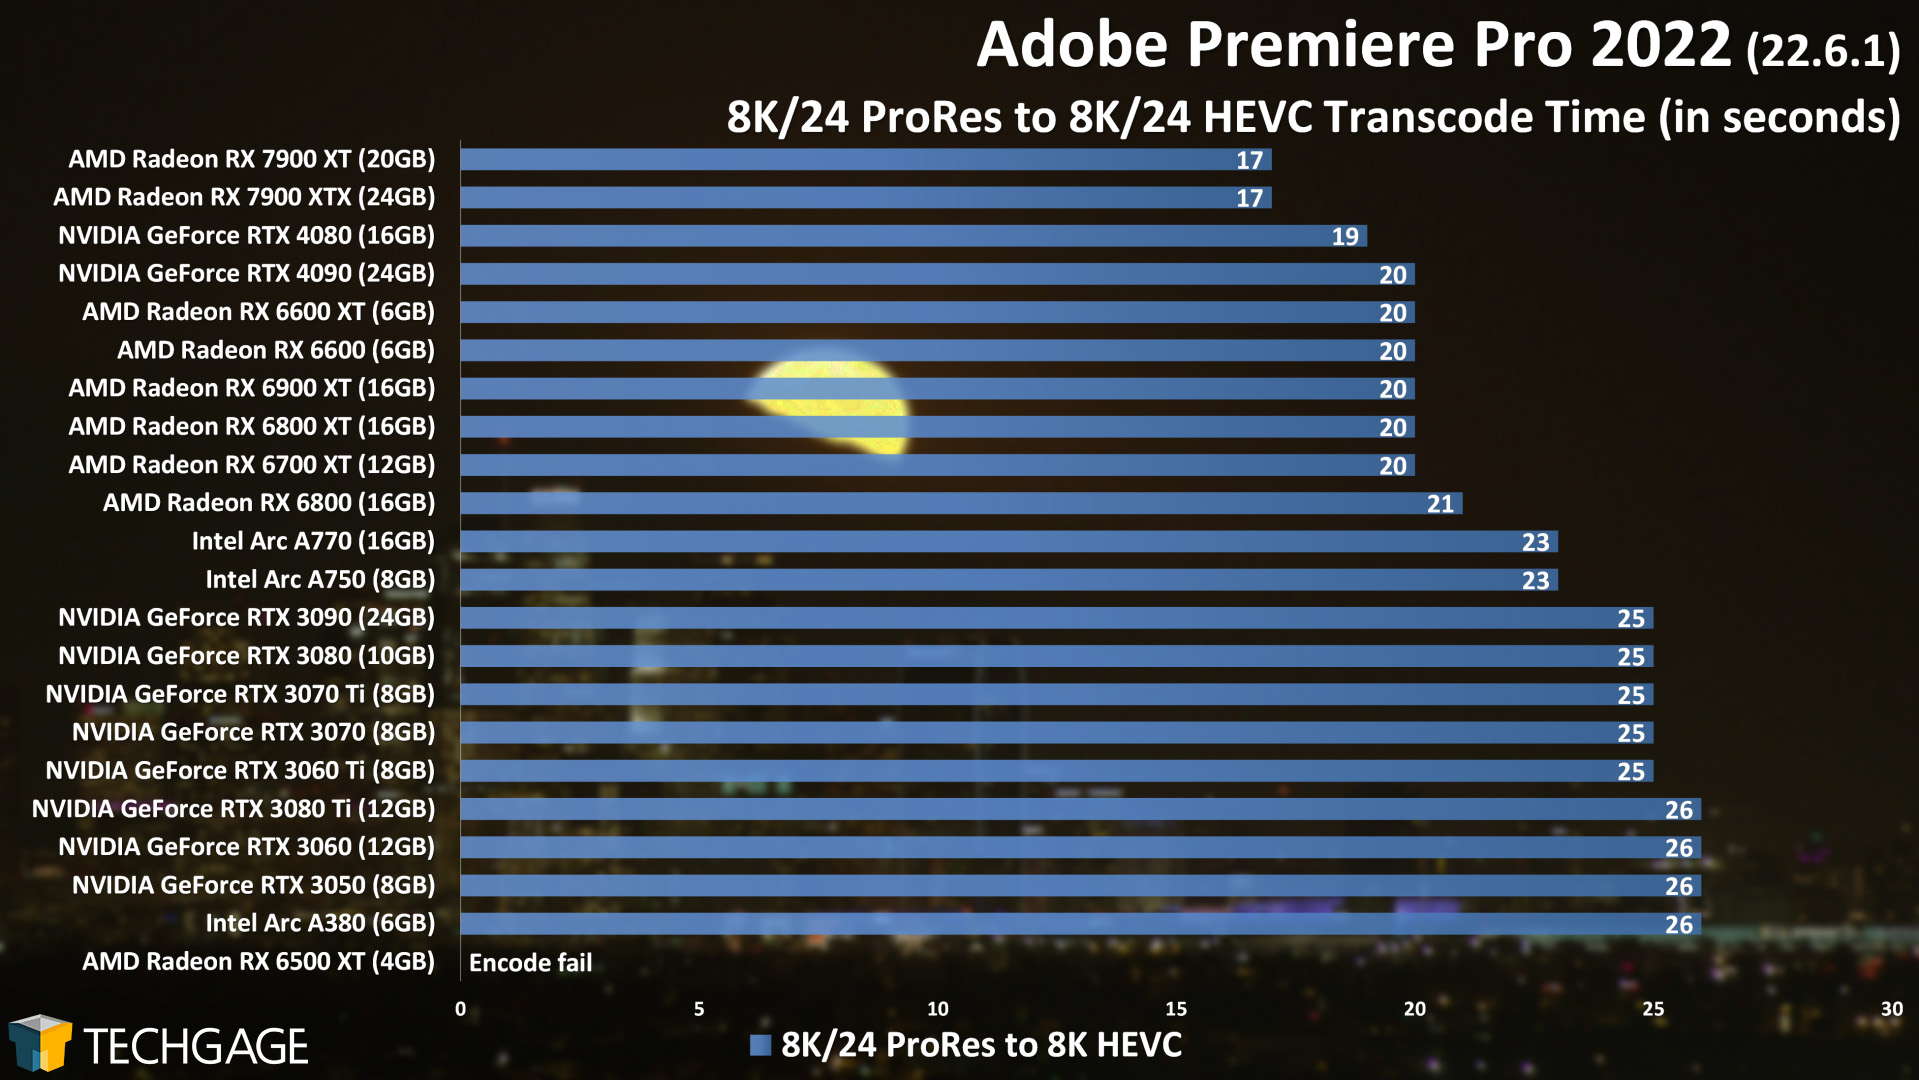 Adobe Premiere Pro 2022 - 8K24 ProRes to 8K24 HEVC GPU Encode Performance (AMD Radeon RX 7900 XT and XTX)